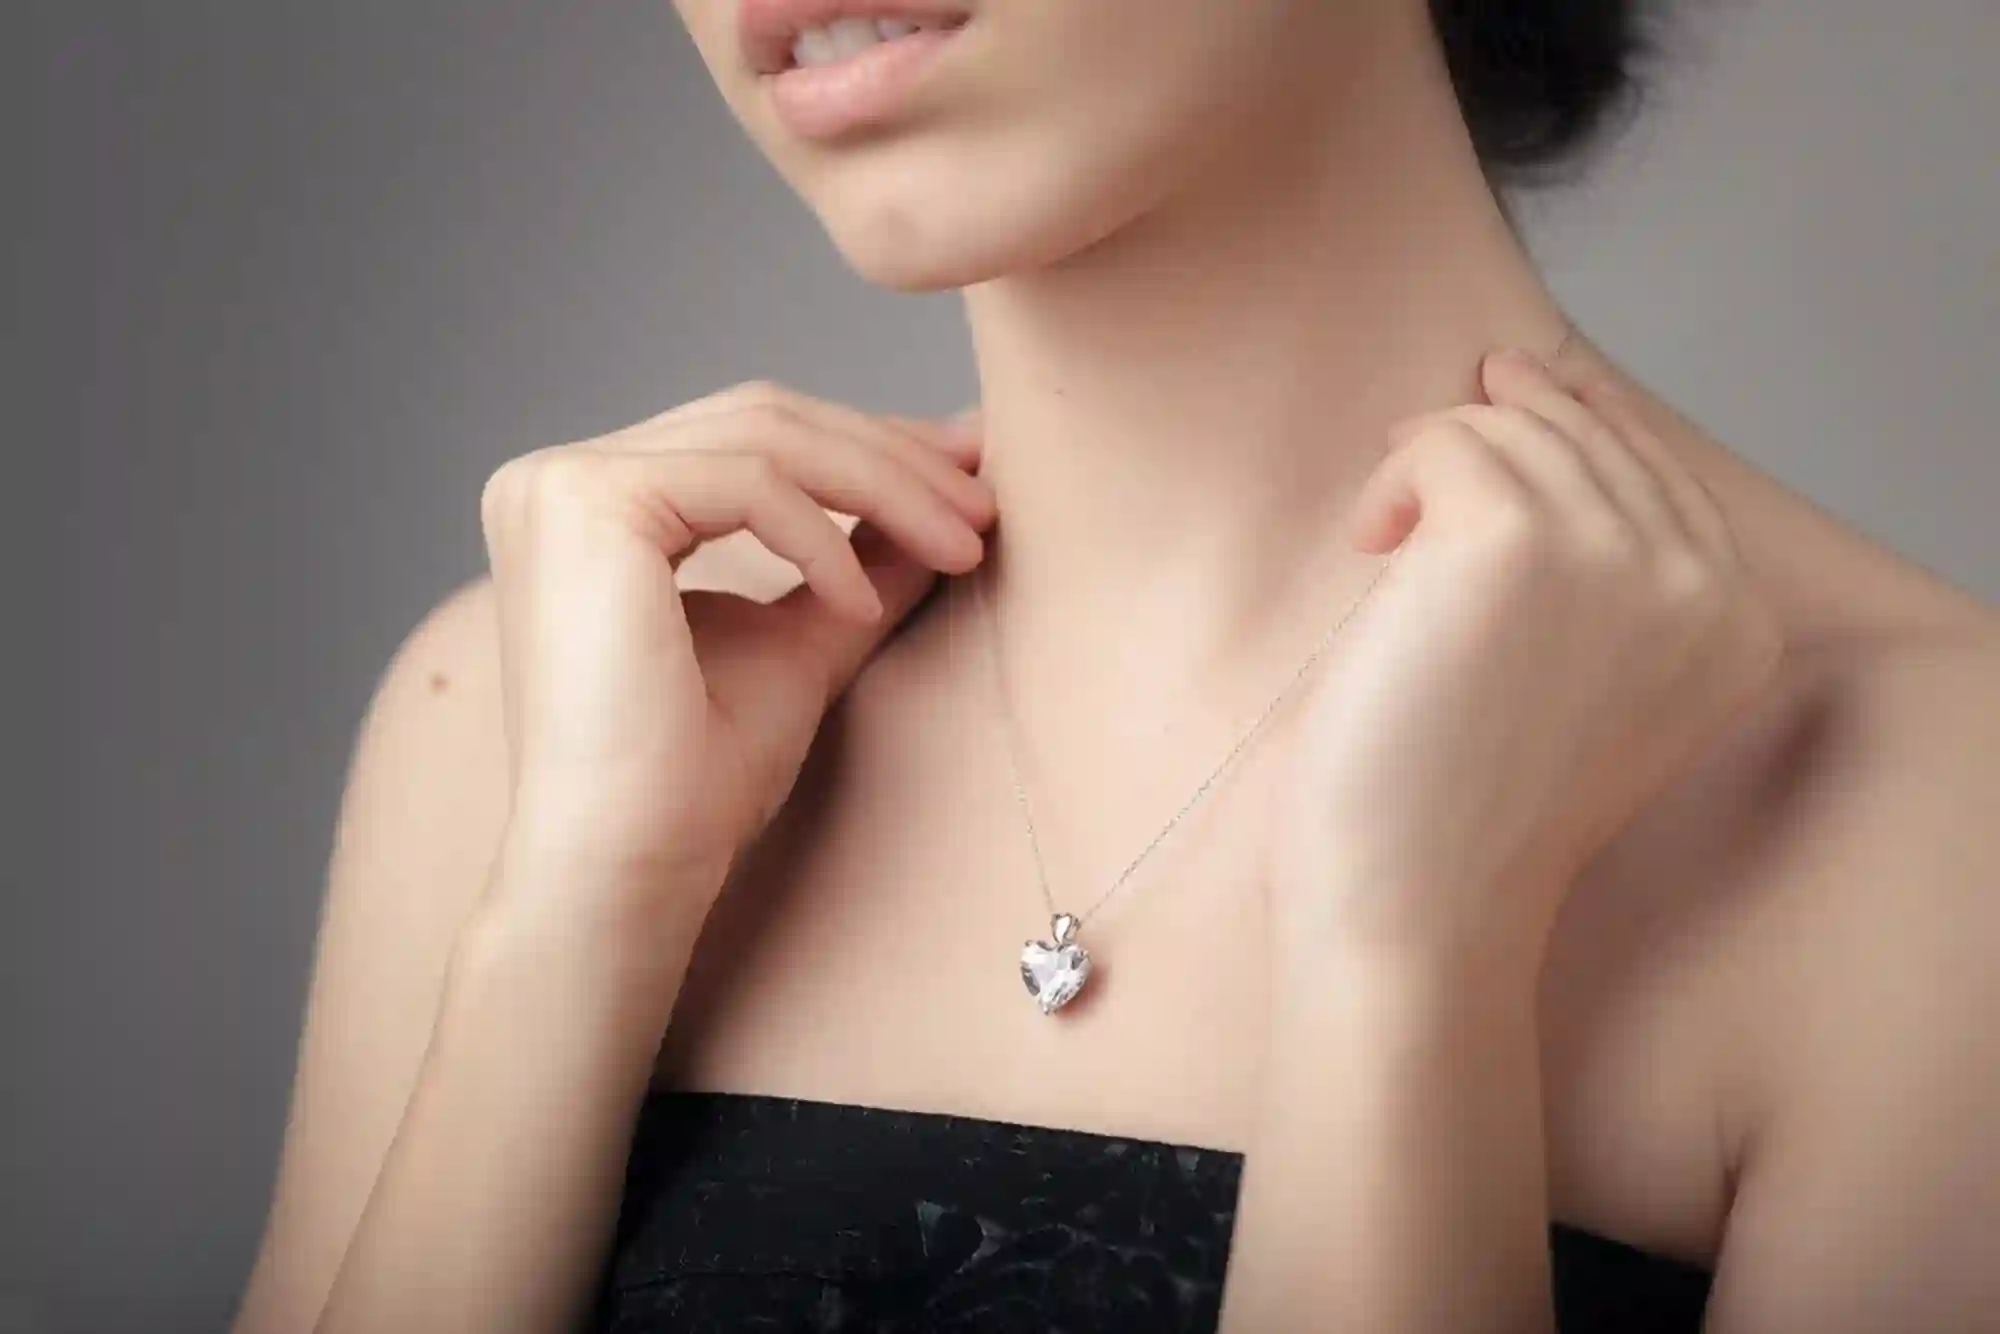 18k Gold Diamond Heart Necklace - 1.5 ct Diamond Pendant HEART Diamond Jewelry for women - Heart Solitaire Necklace Diamond Anniversary gift 